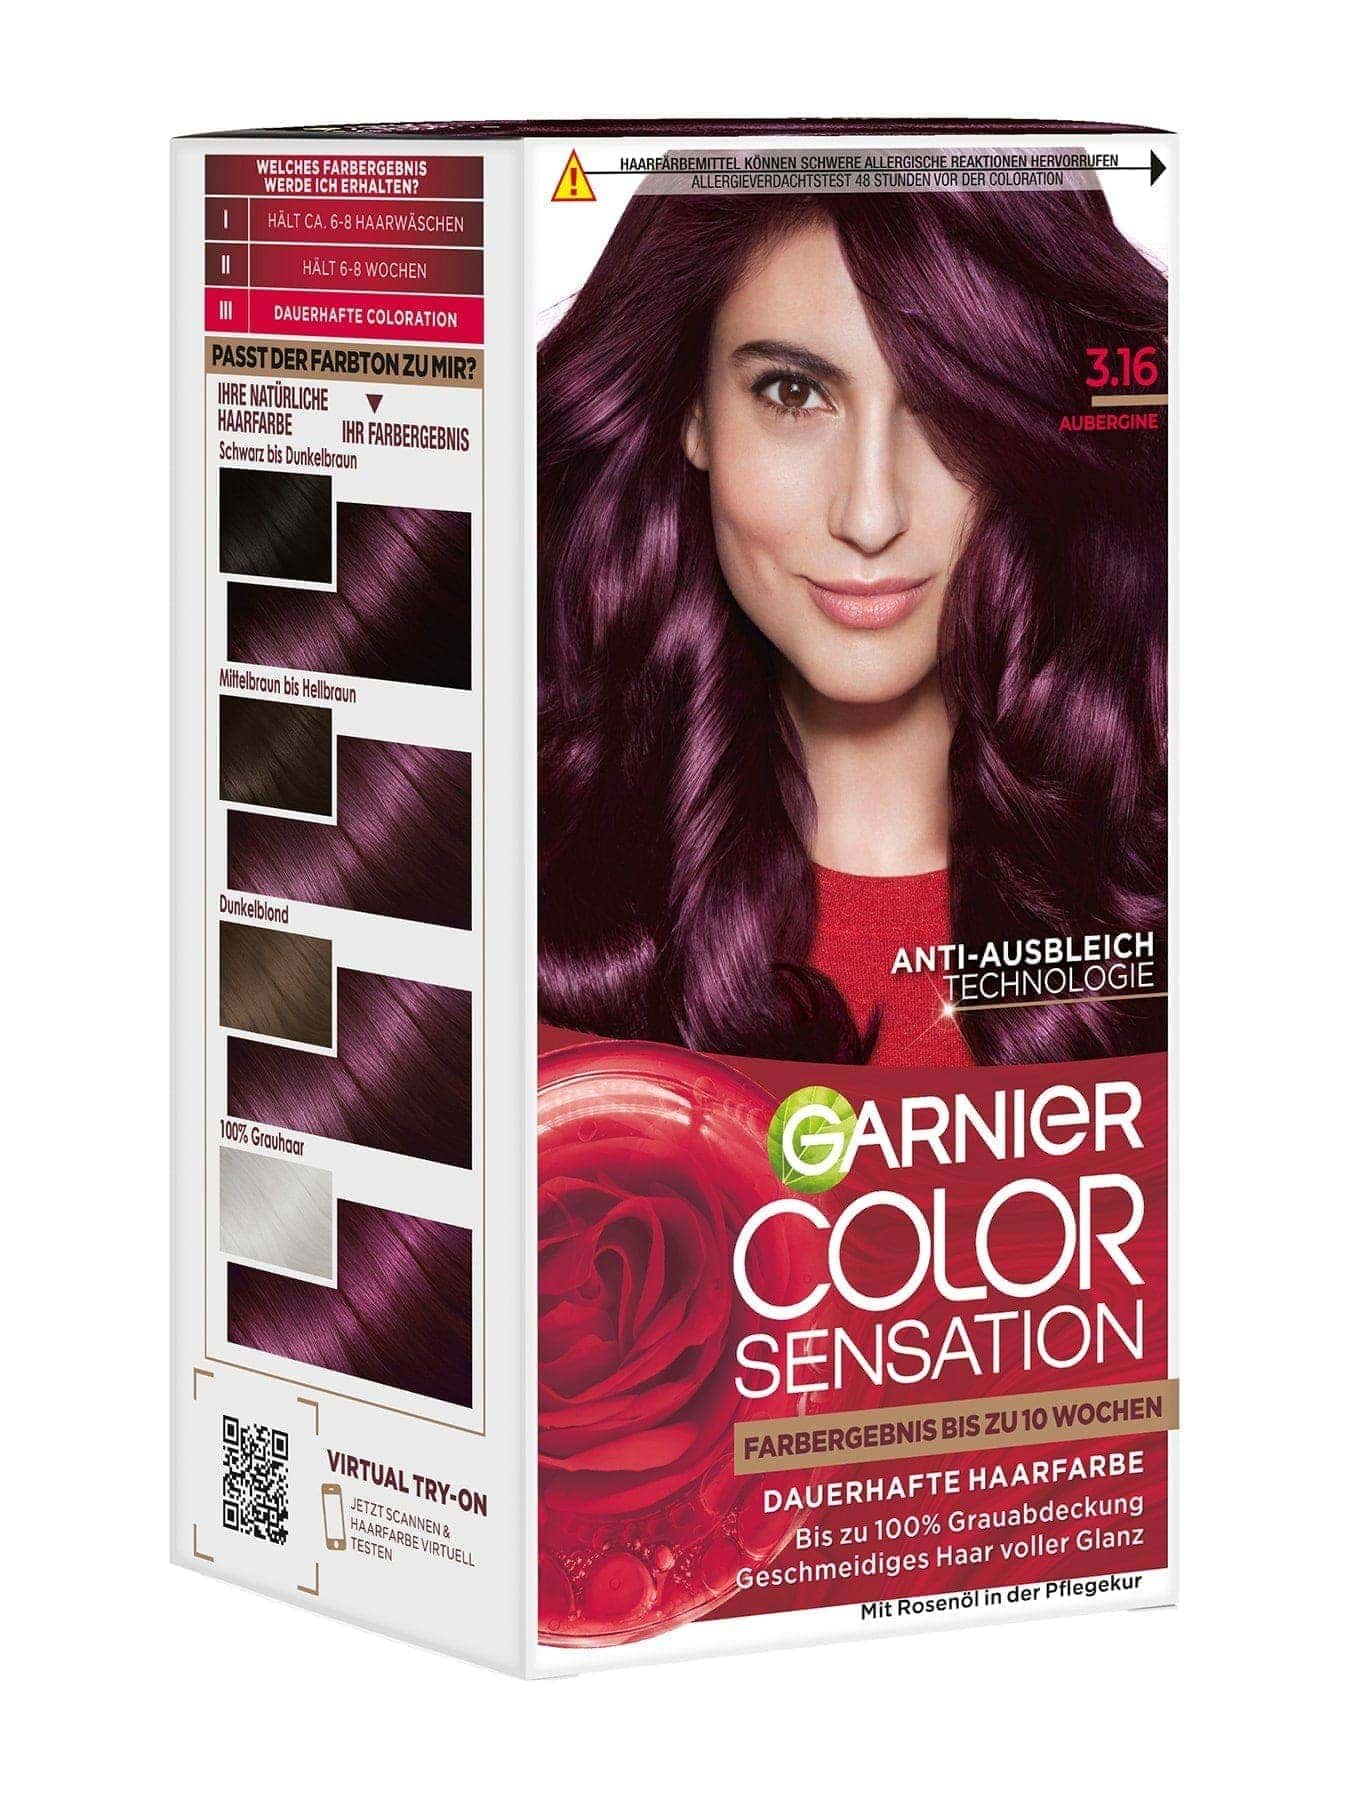 Color Sensation dauerhafte Haarfarbe 3.16 Aubergine Produktbild